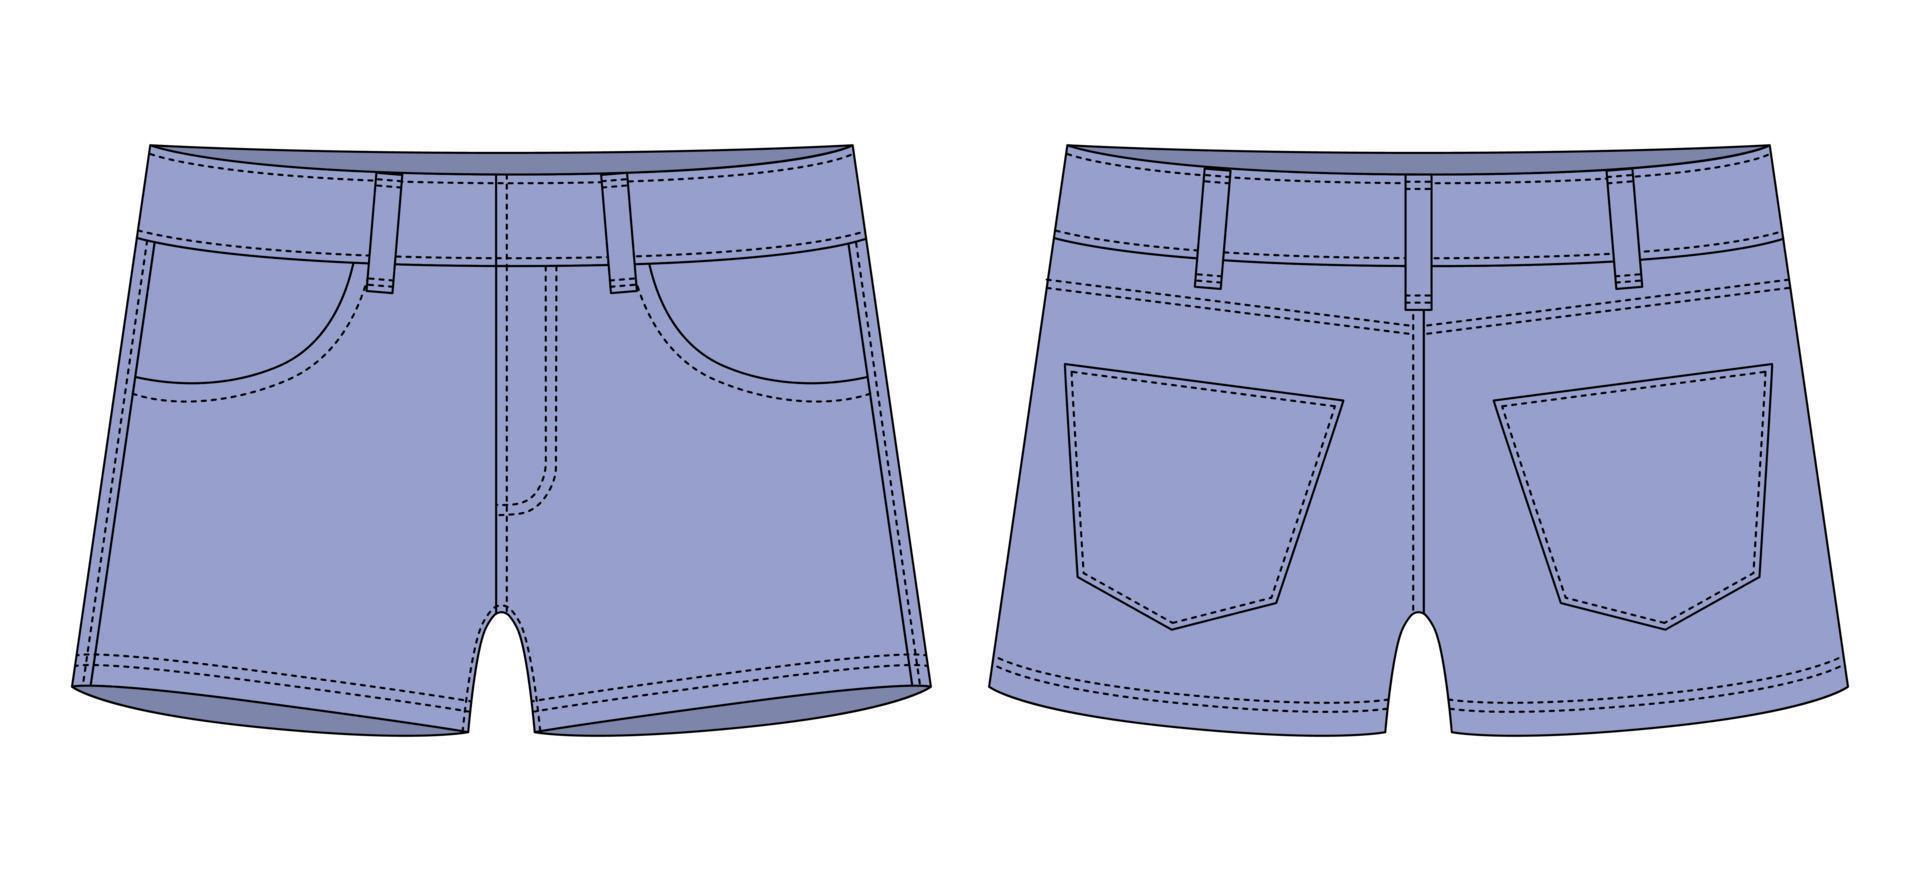 Denim short with pockets technical sketch. Cool blue color. Kids jeans shorts design template. vector